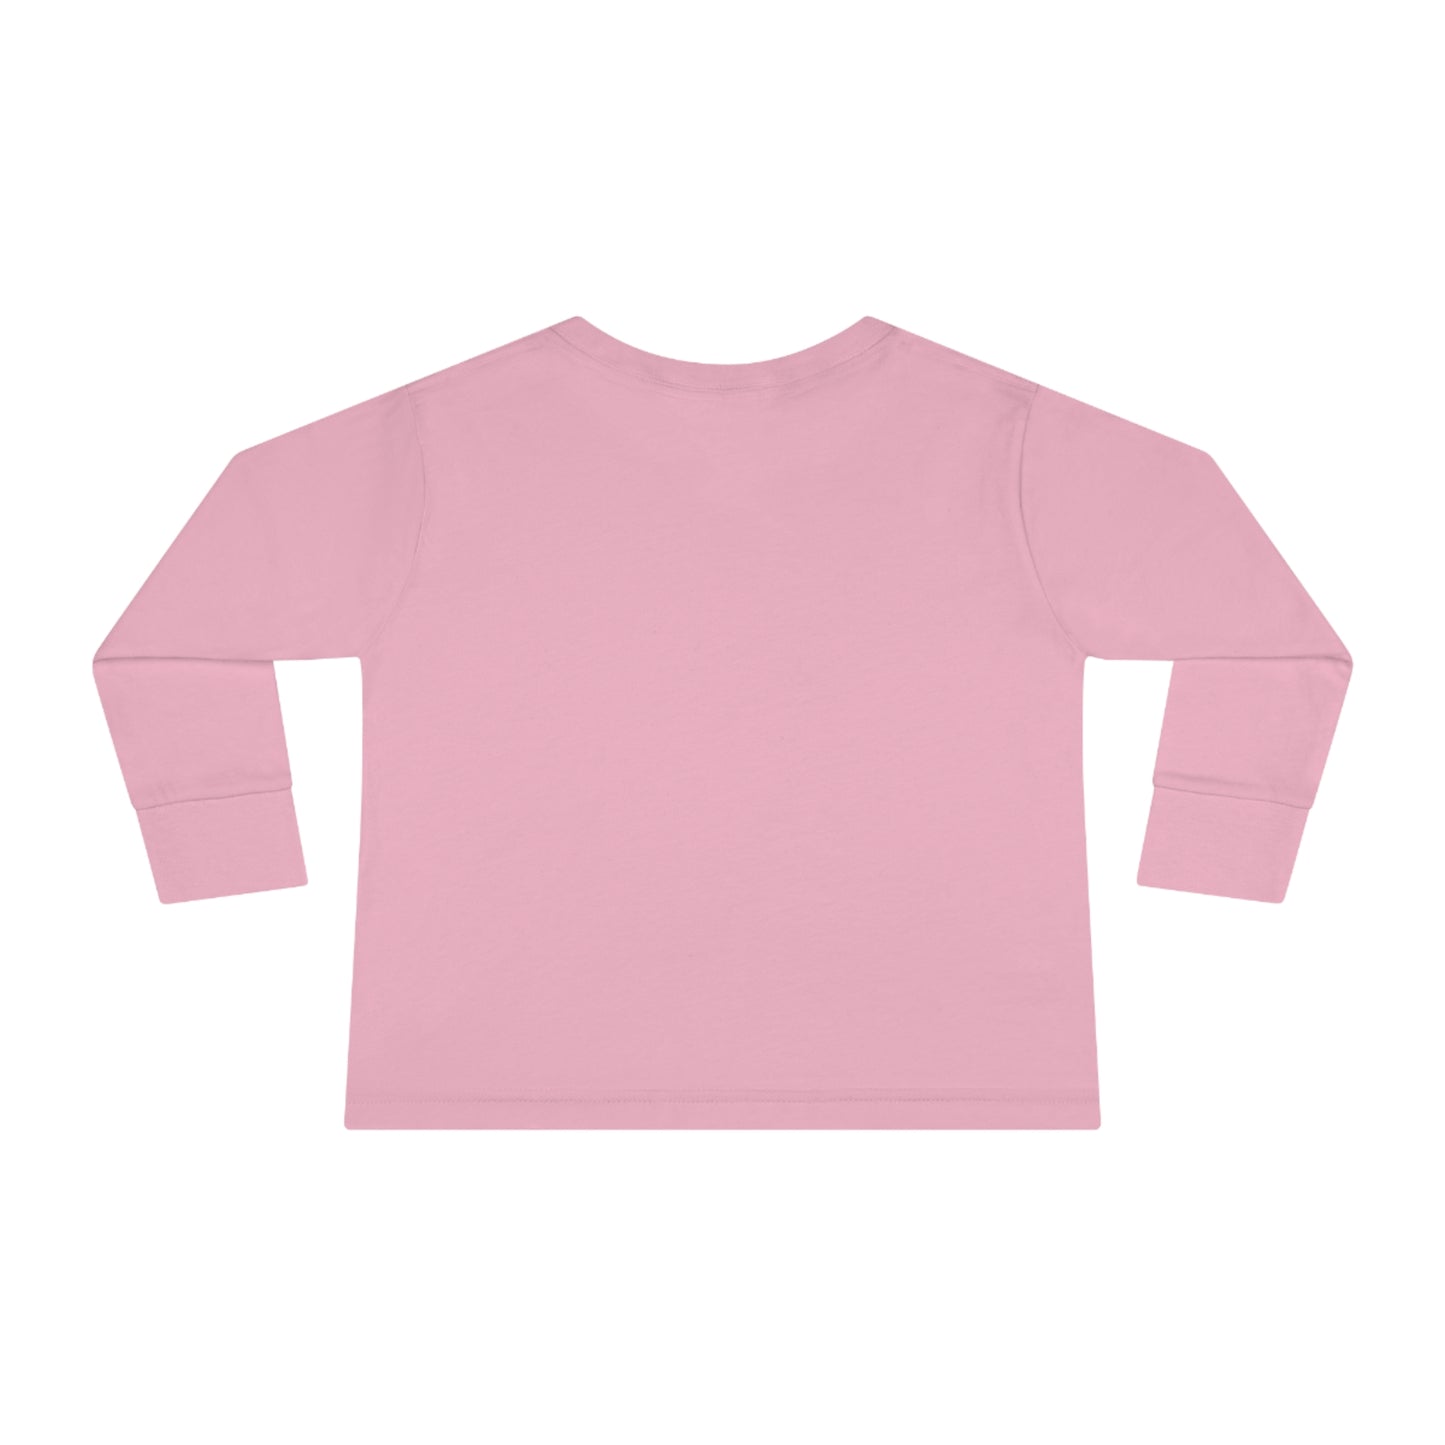 Trailblazer - Toddler Long Sleeve T-shirt